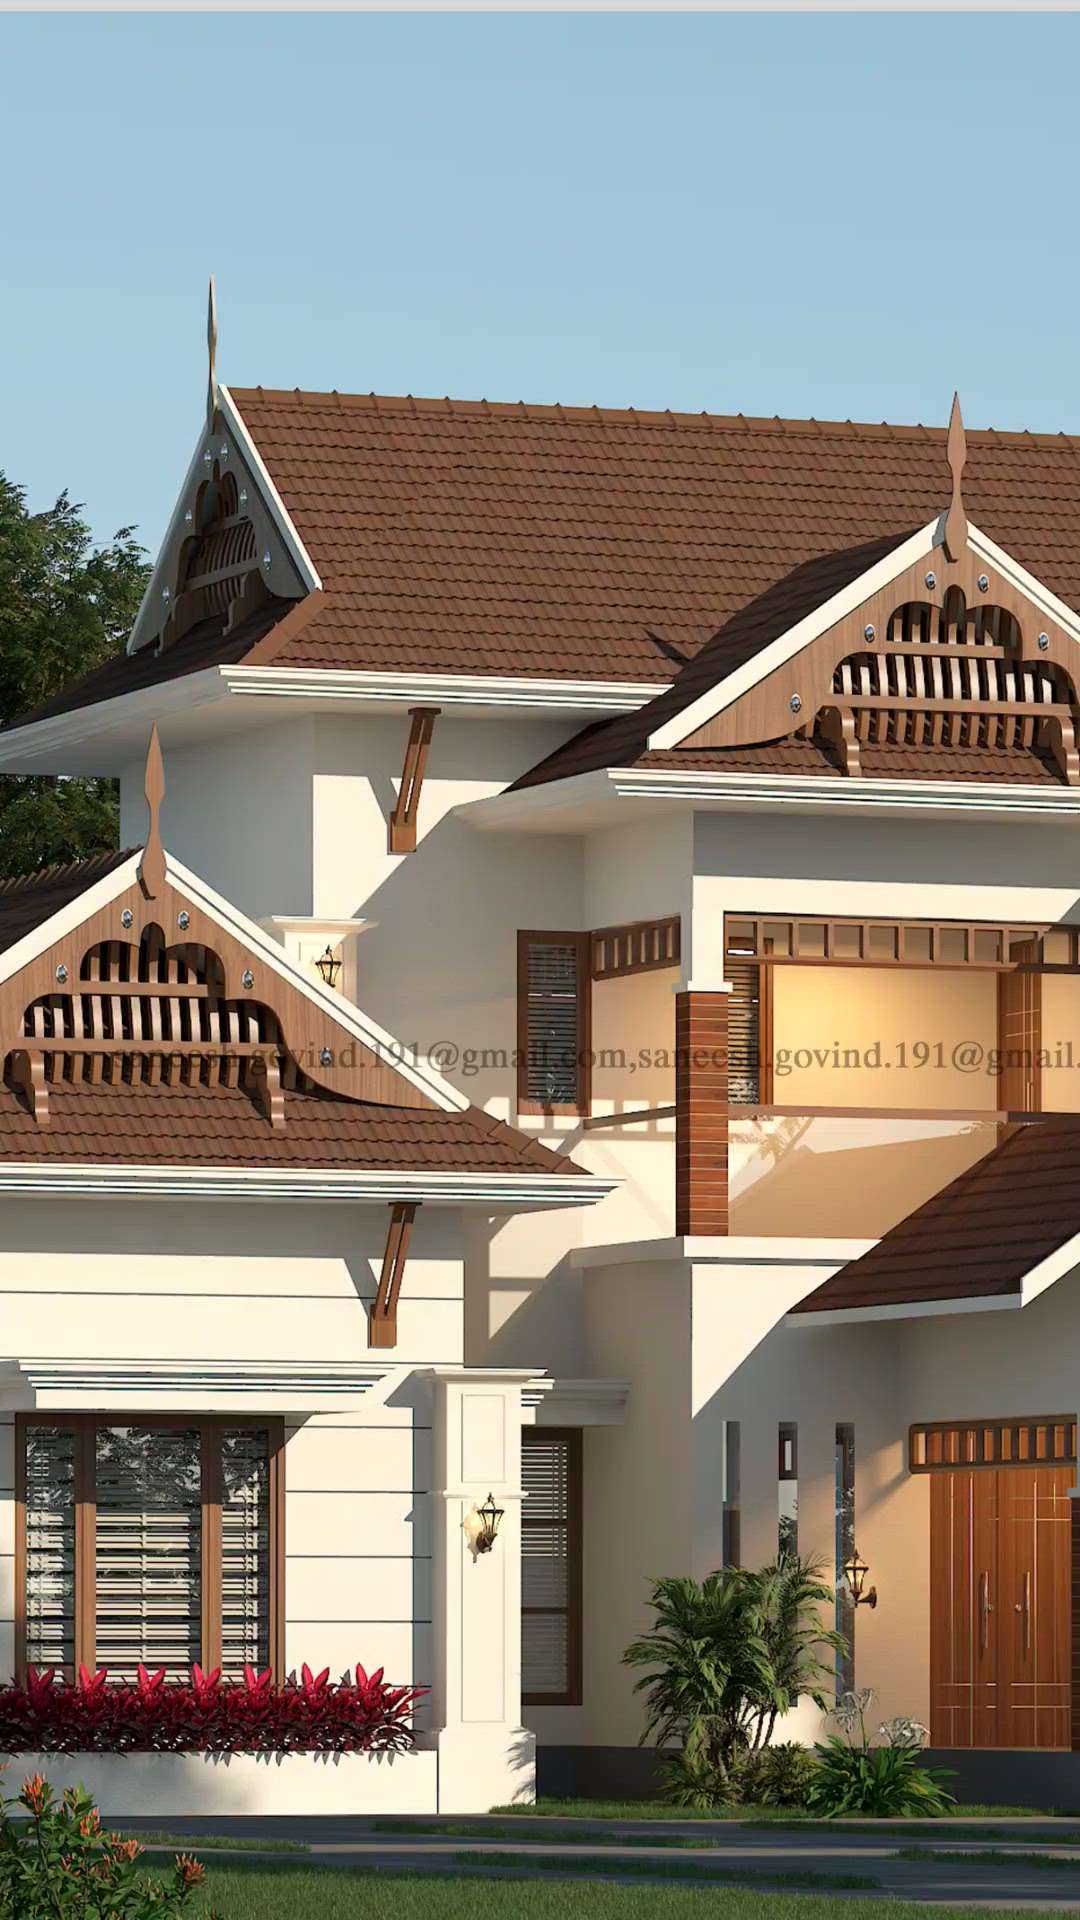 Design for mr. Salam at irinjalakkuda
Area:3100sqft
 #KeralaStyleHouse
 #veedudesign
 #keralaarchitectures